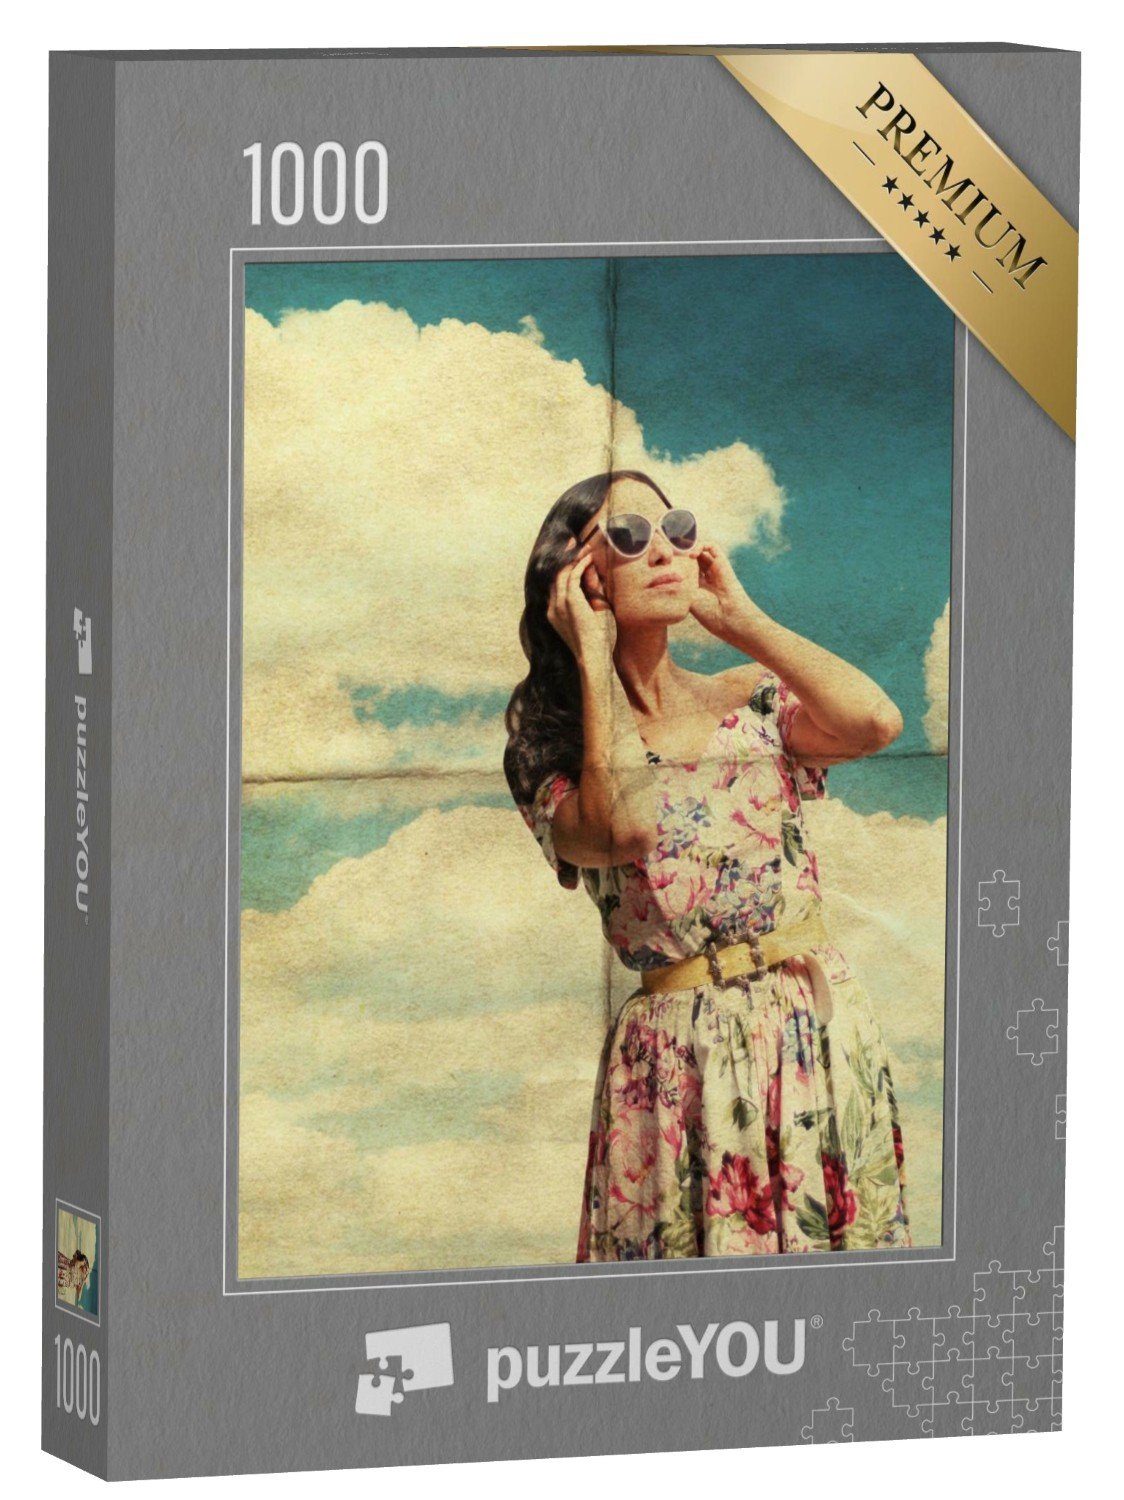 puzzleYOU Puzzle Junge Frau mit Sonnenbrille im Retro-Kleid, 1000 Puzzleteile, puzzleYOU-Kollektionen Vintage